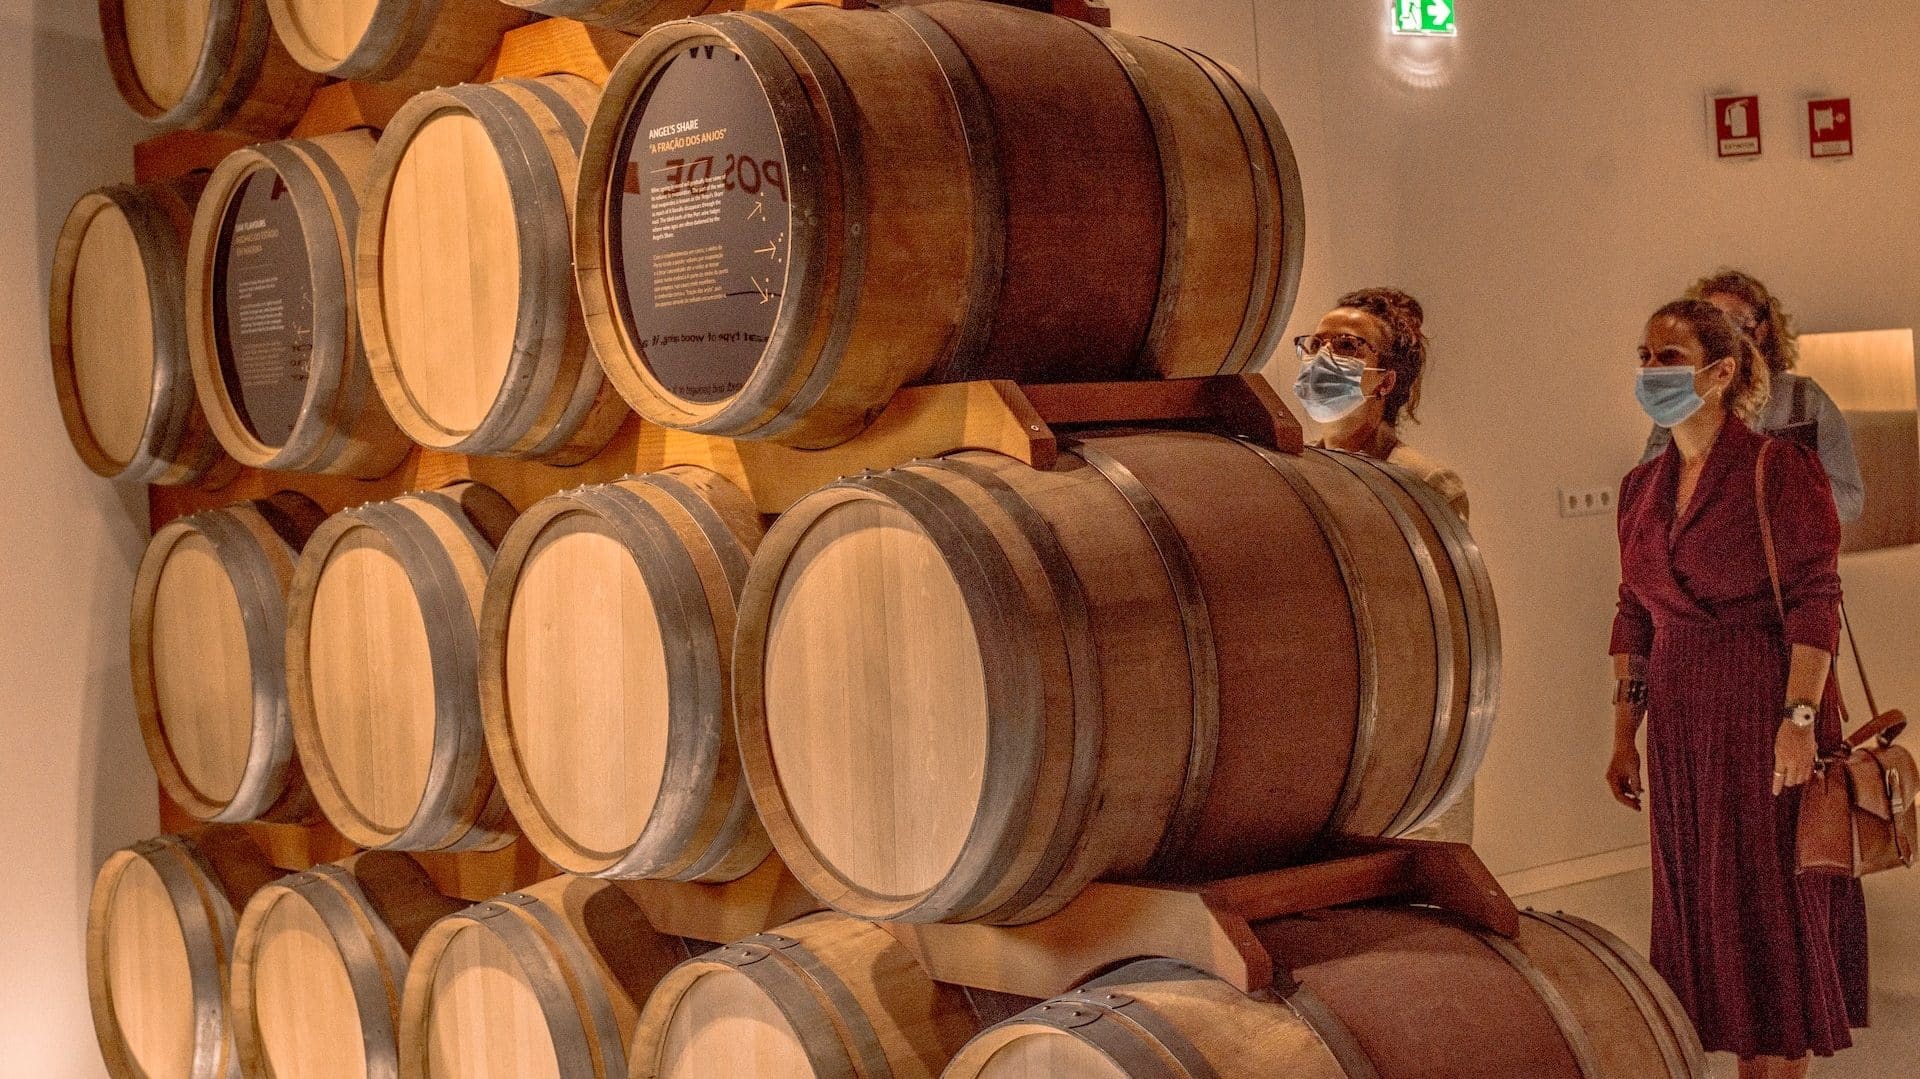 Vila Nova de Gaia is the best district in Porto for wine lovers